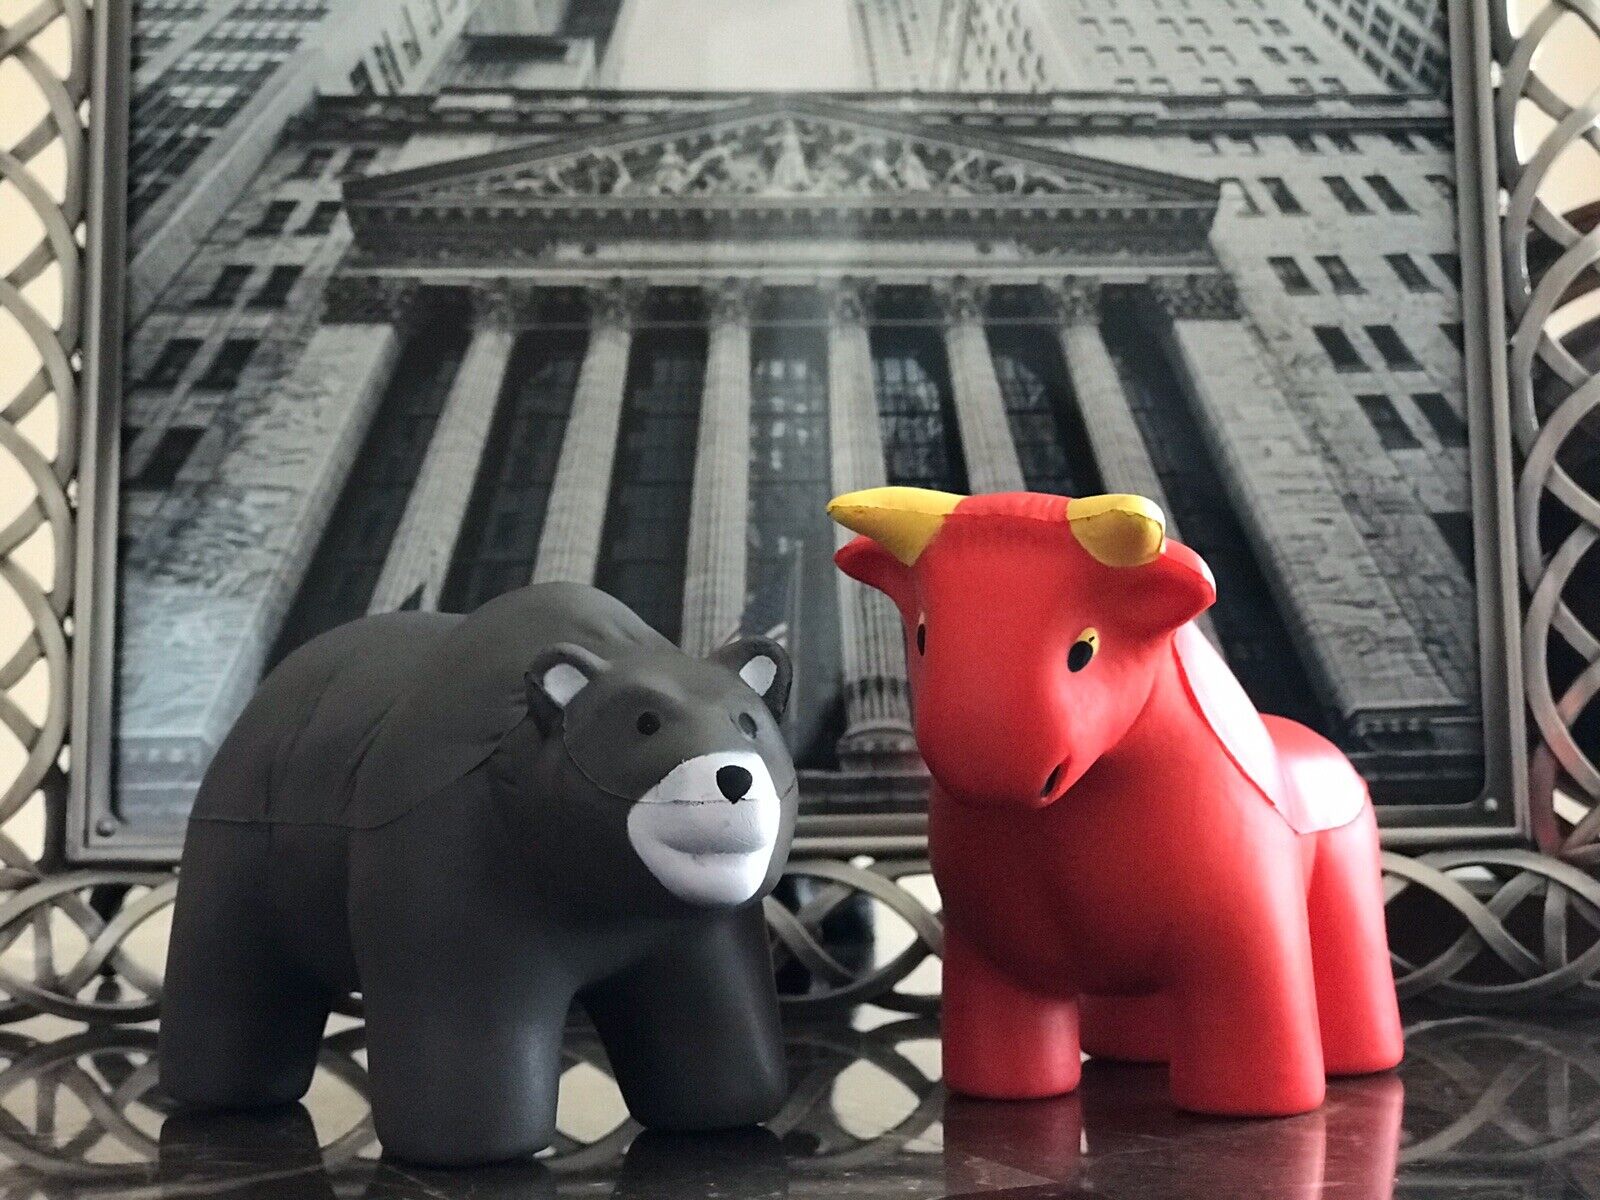 Stock Market Bull And Bear, Wall Street, Financial Advisor, Investing